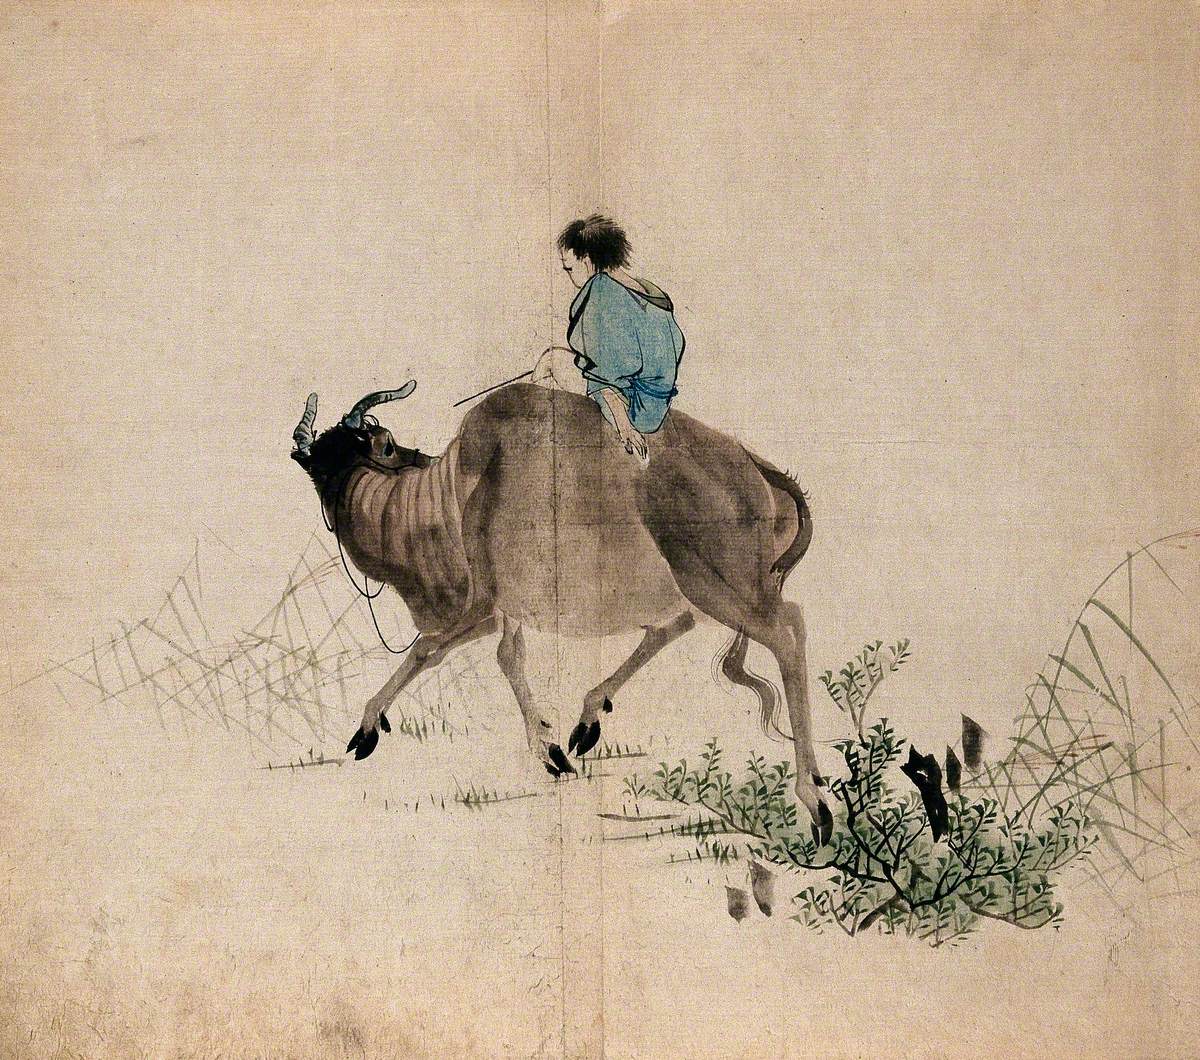 A Man Riding an Ox through Grass and Shrub Land